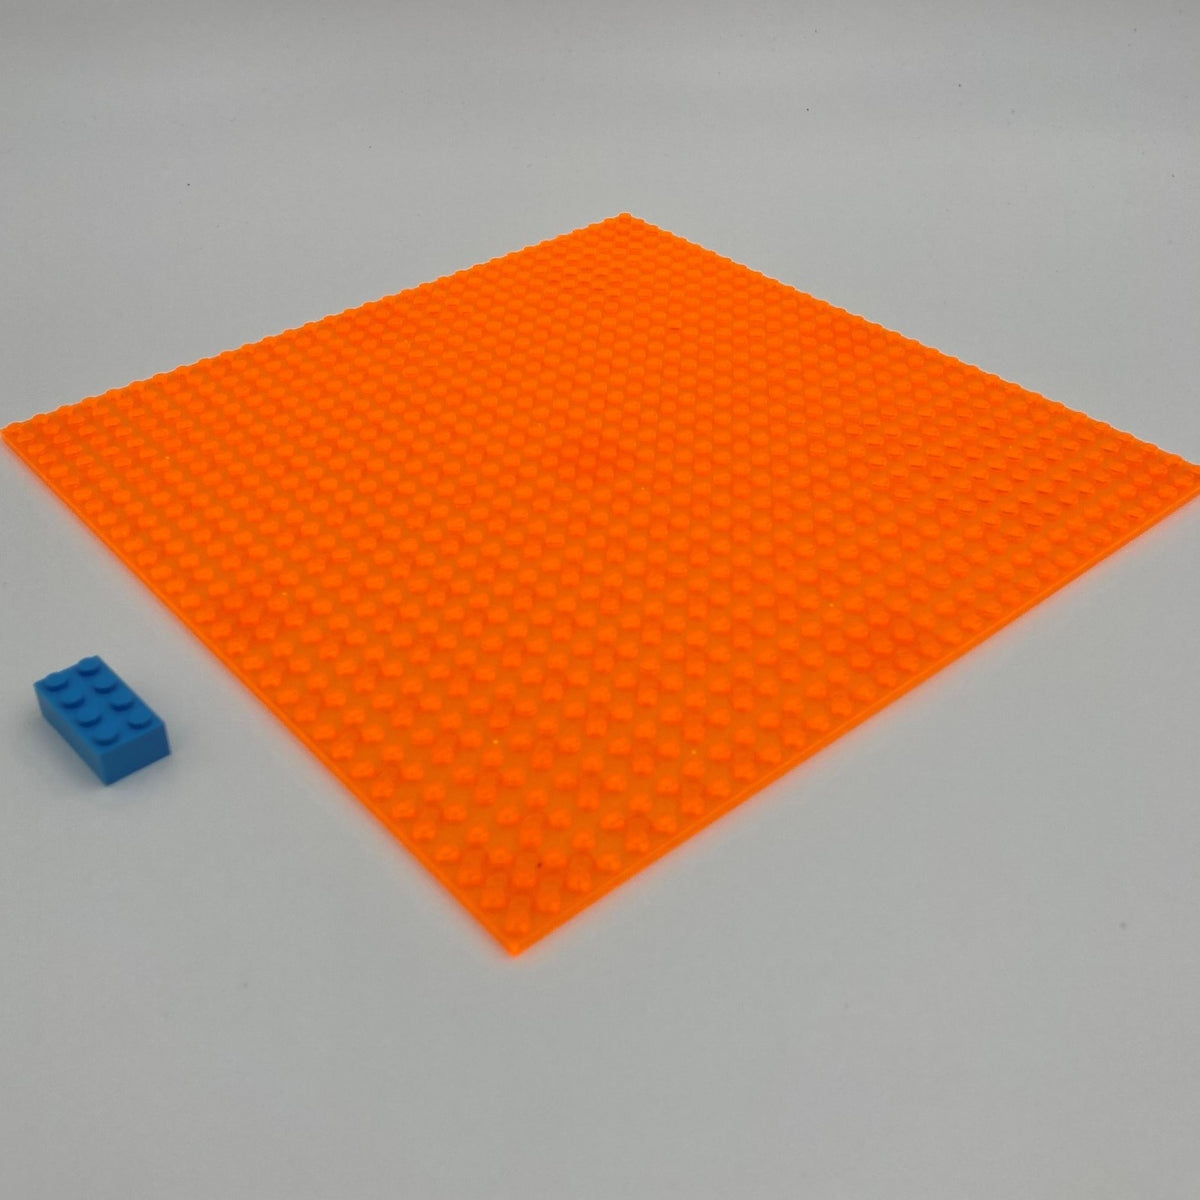 AA0031 - Grundplatte transparent orange, unterbaubar 32x32